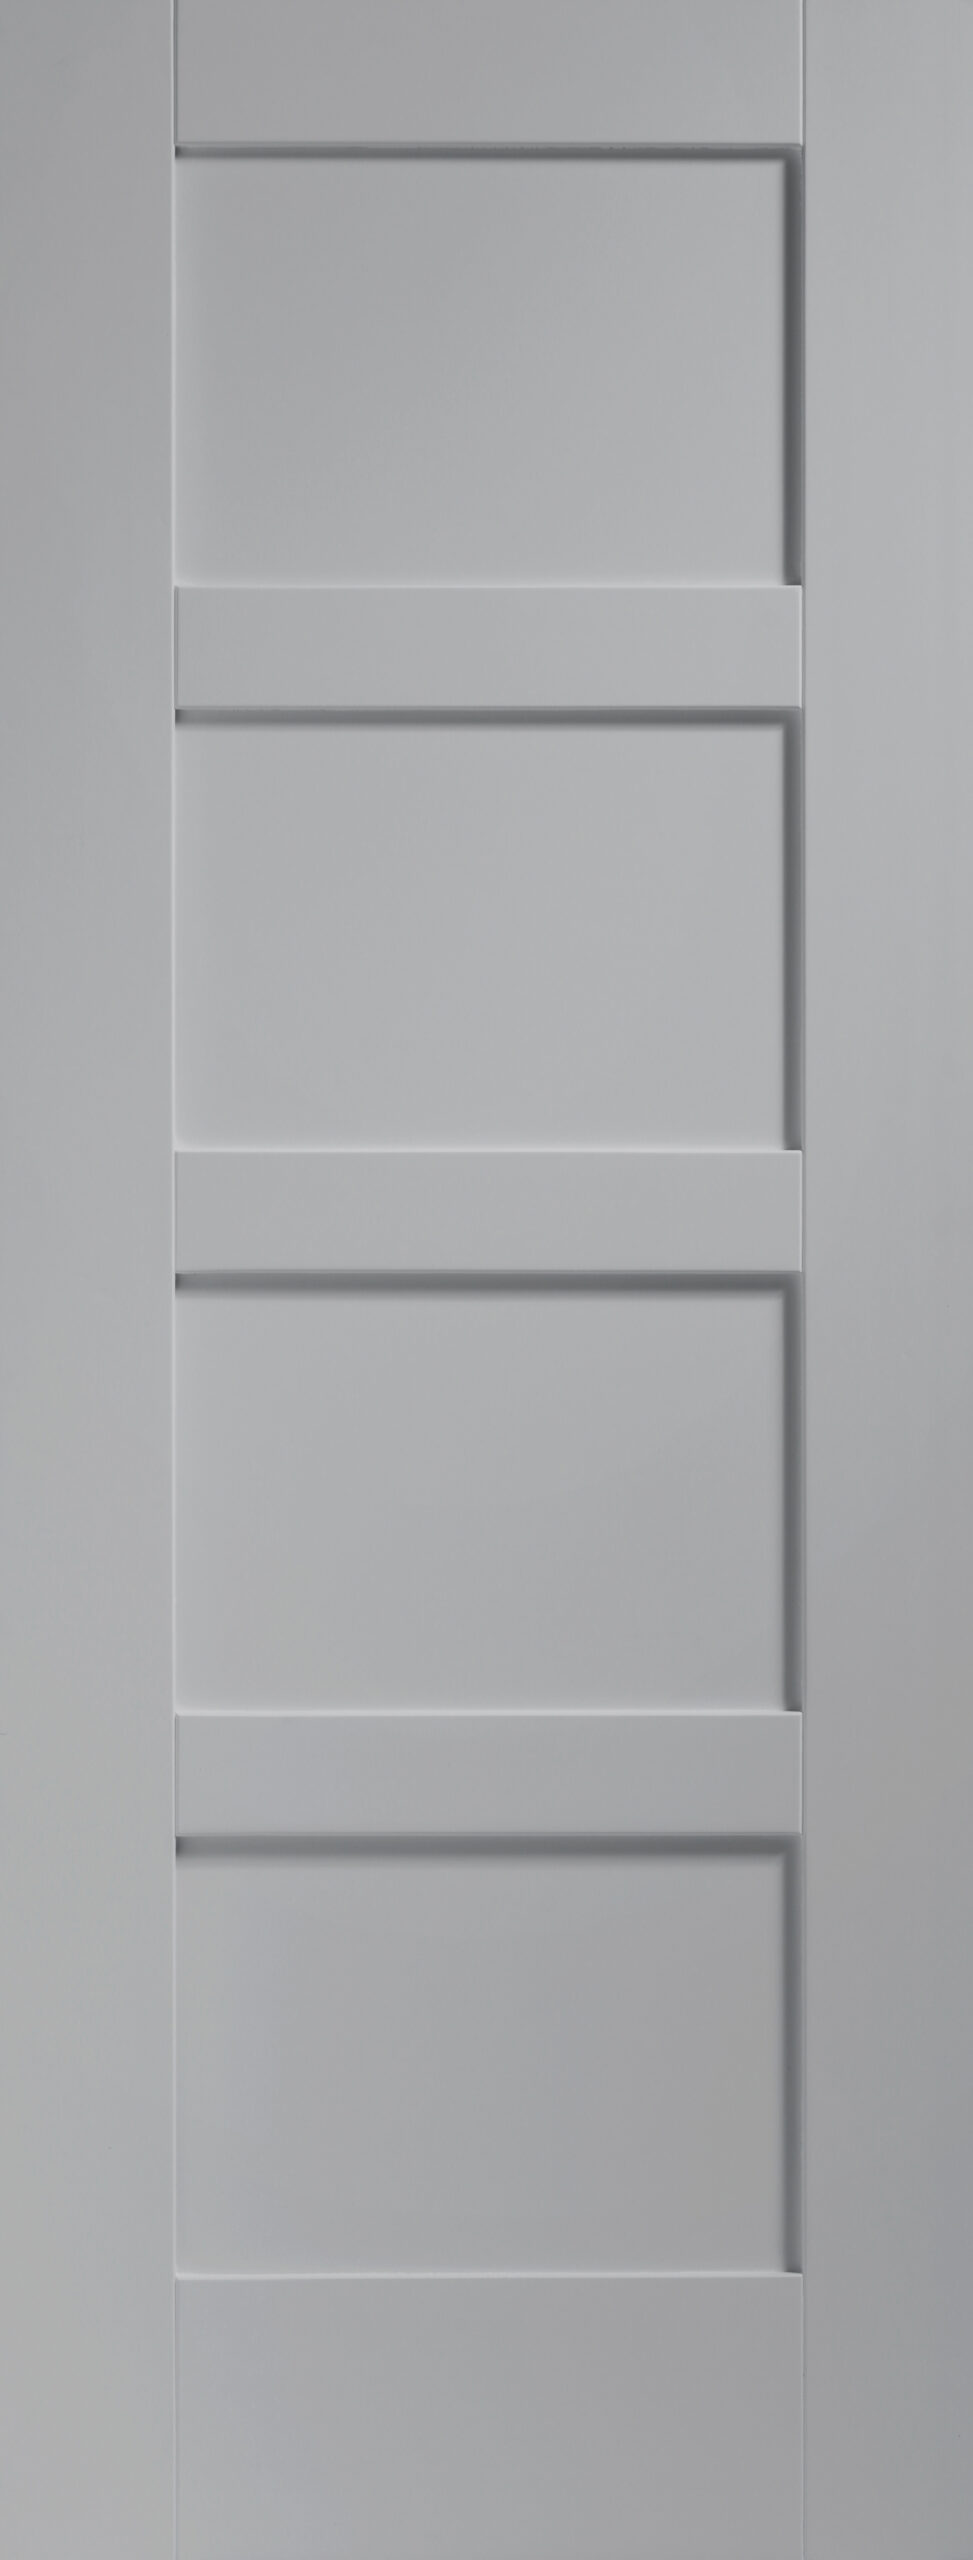 Shaker 4 Panel Internal White Primed Fire Door – Storm, 1981 x 838 x 44 mm